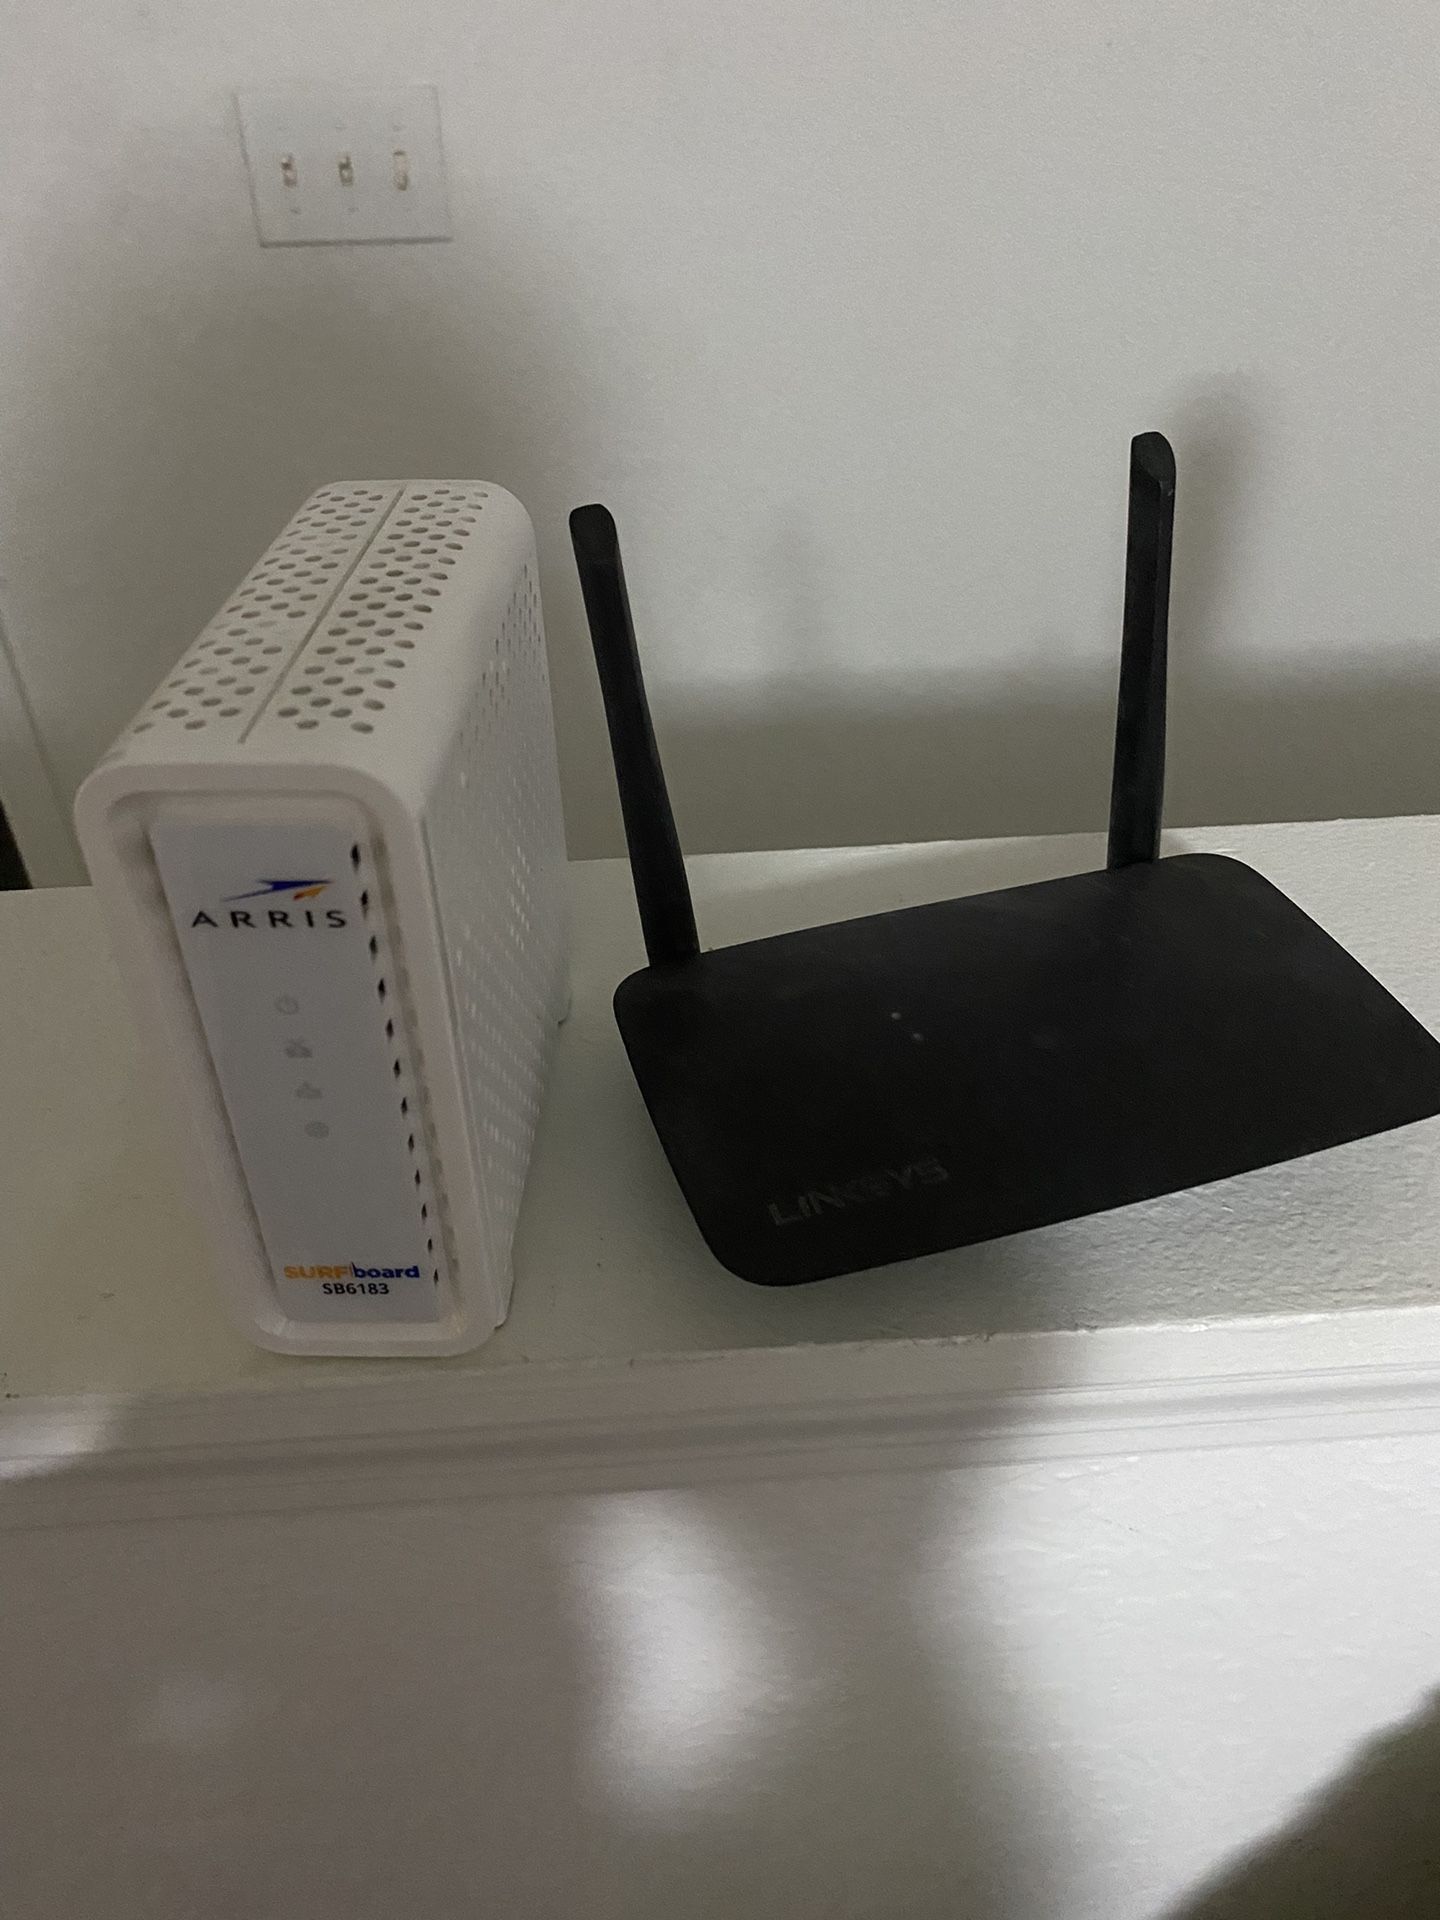 Modem & Wi-Fi Router